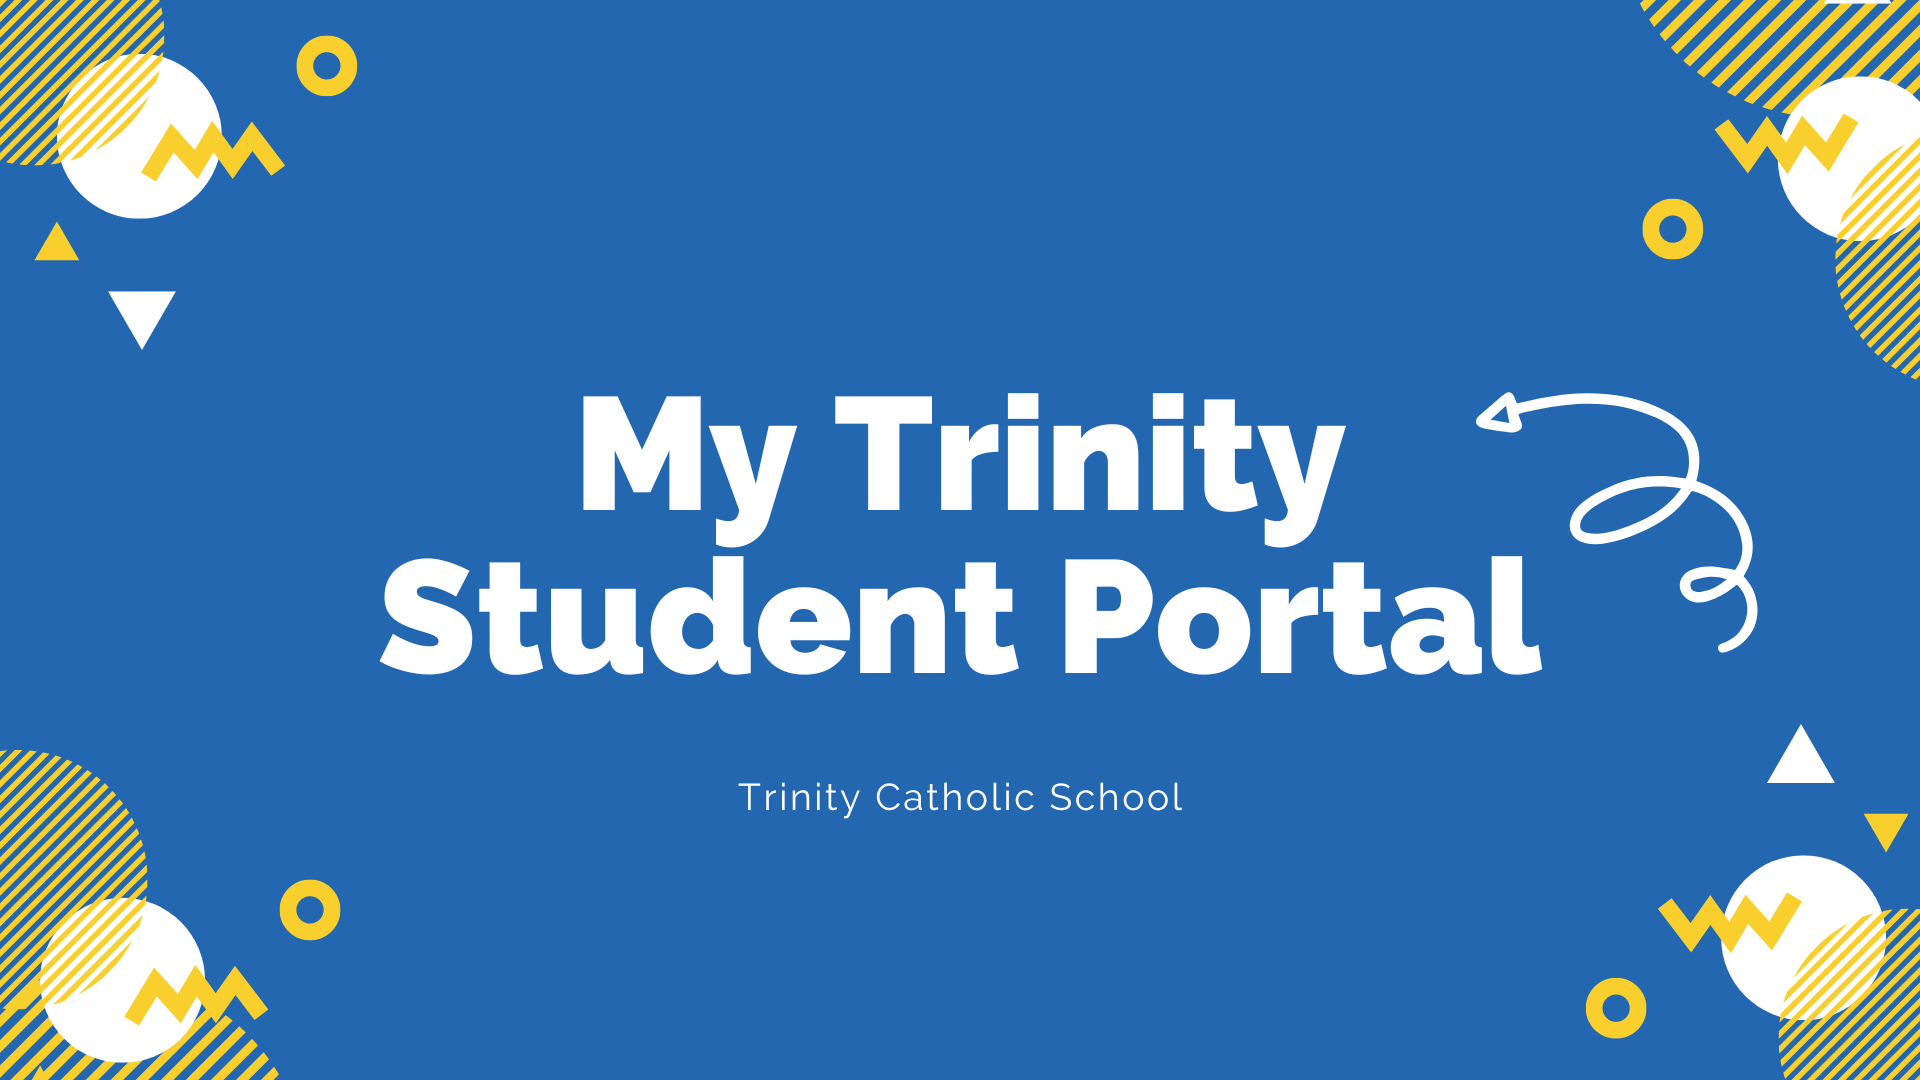 My Trinity Student Portal